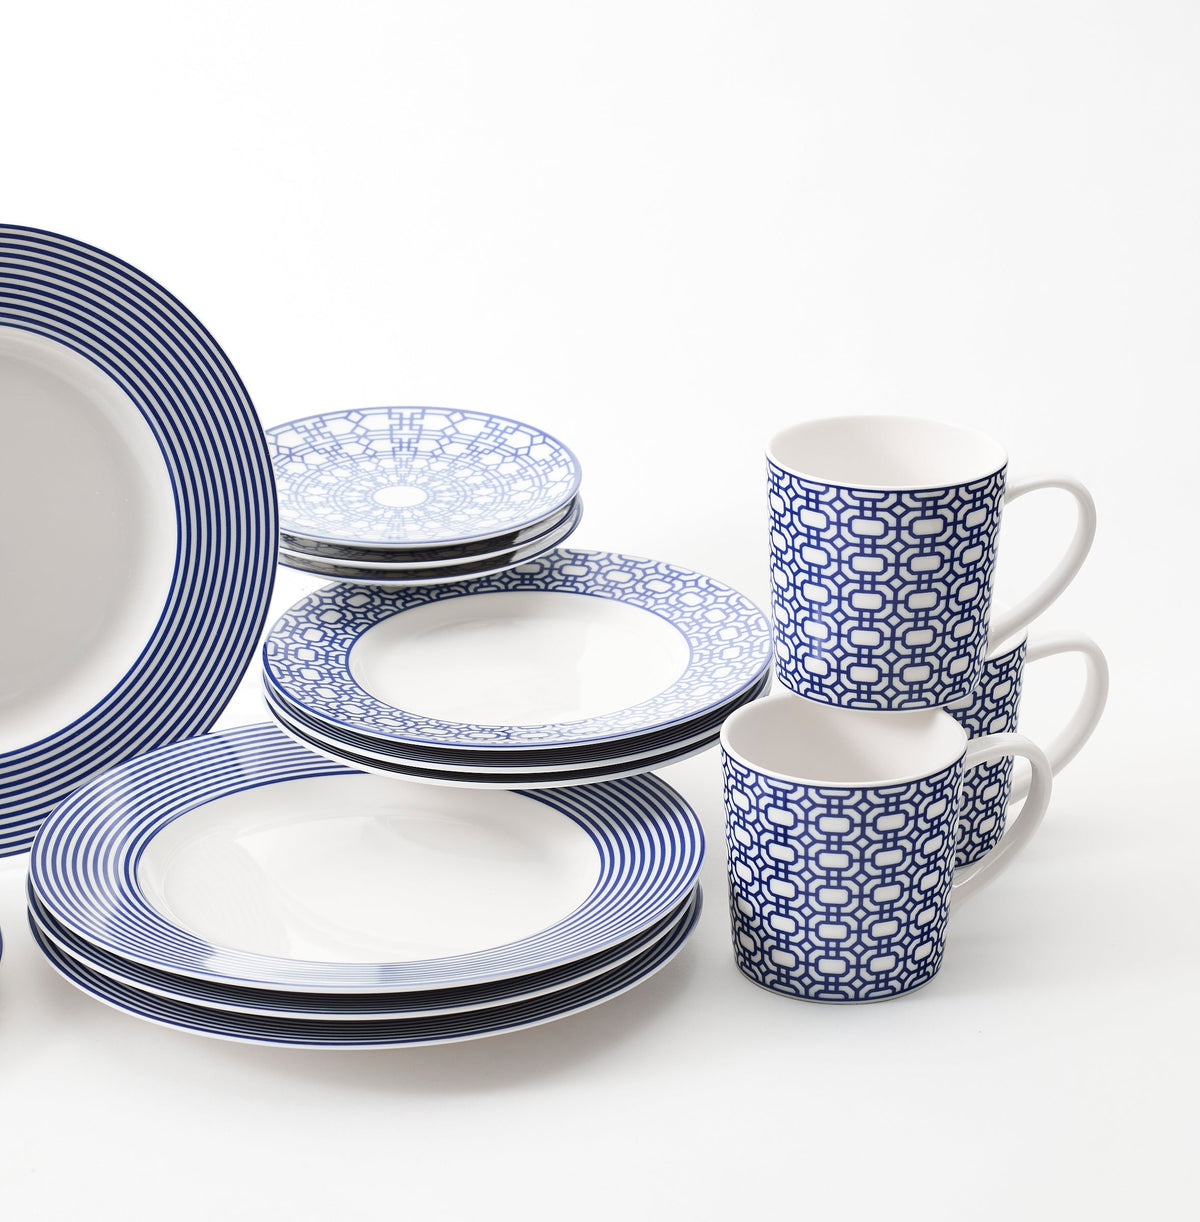 A set of Caskata porcelain dinnerware on a Newport Stripe Table for 4.